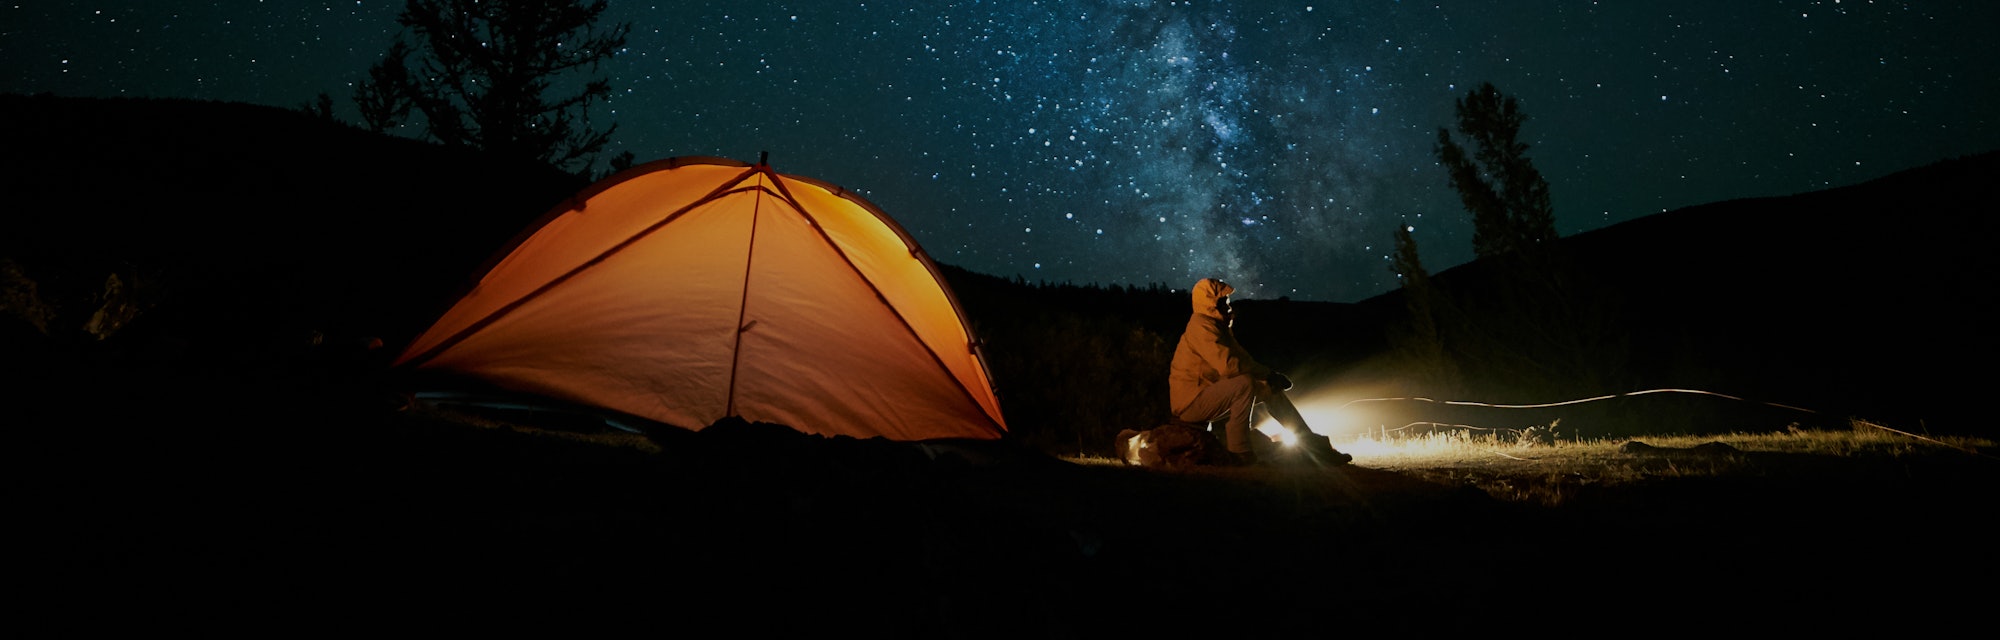 Tourist near his camp tent at night under a sky full of stars. Orange illuminated tent.